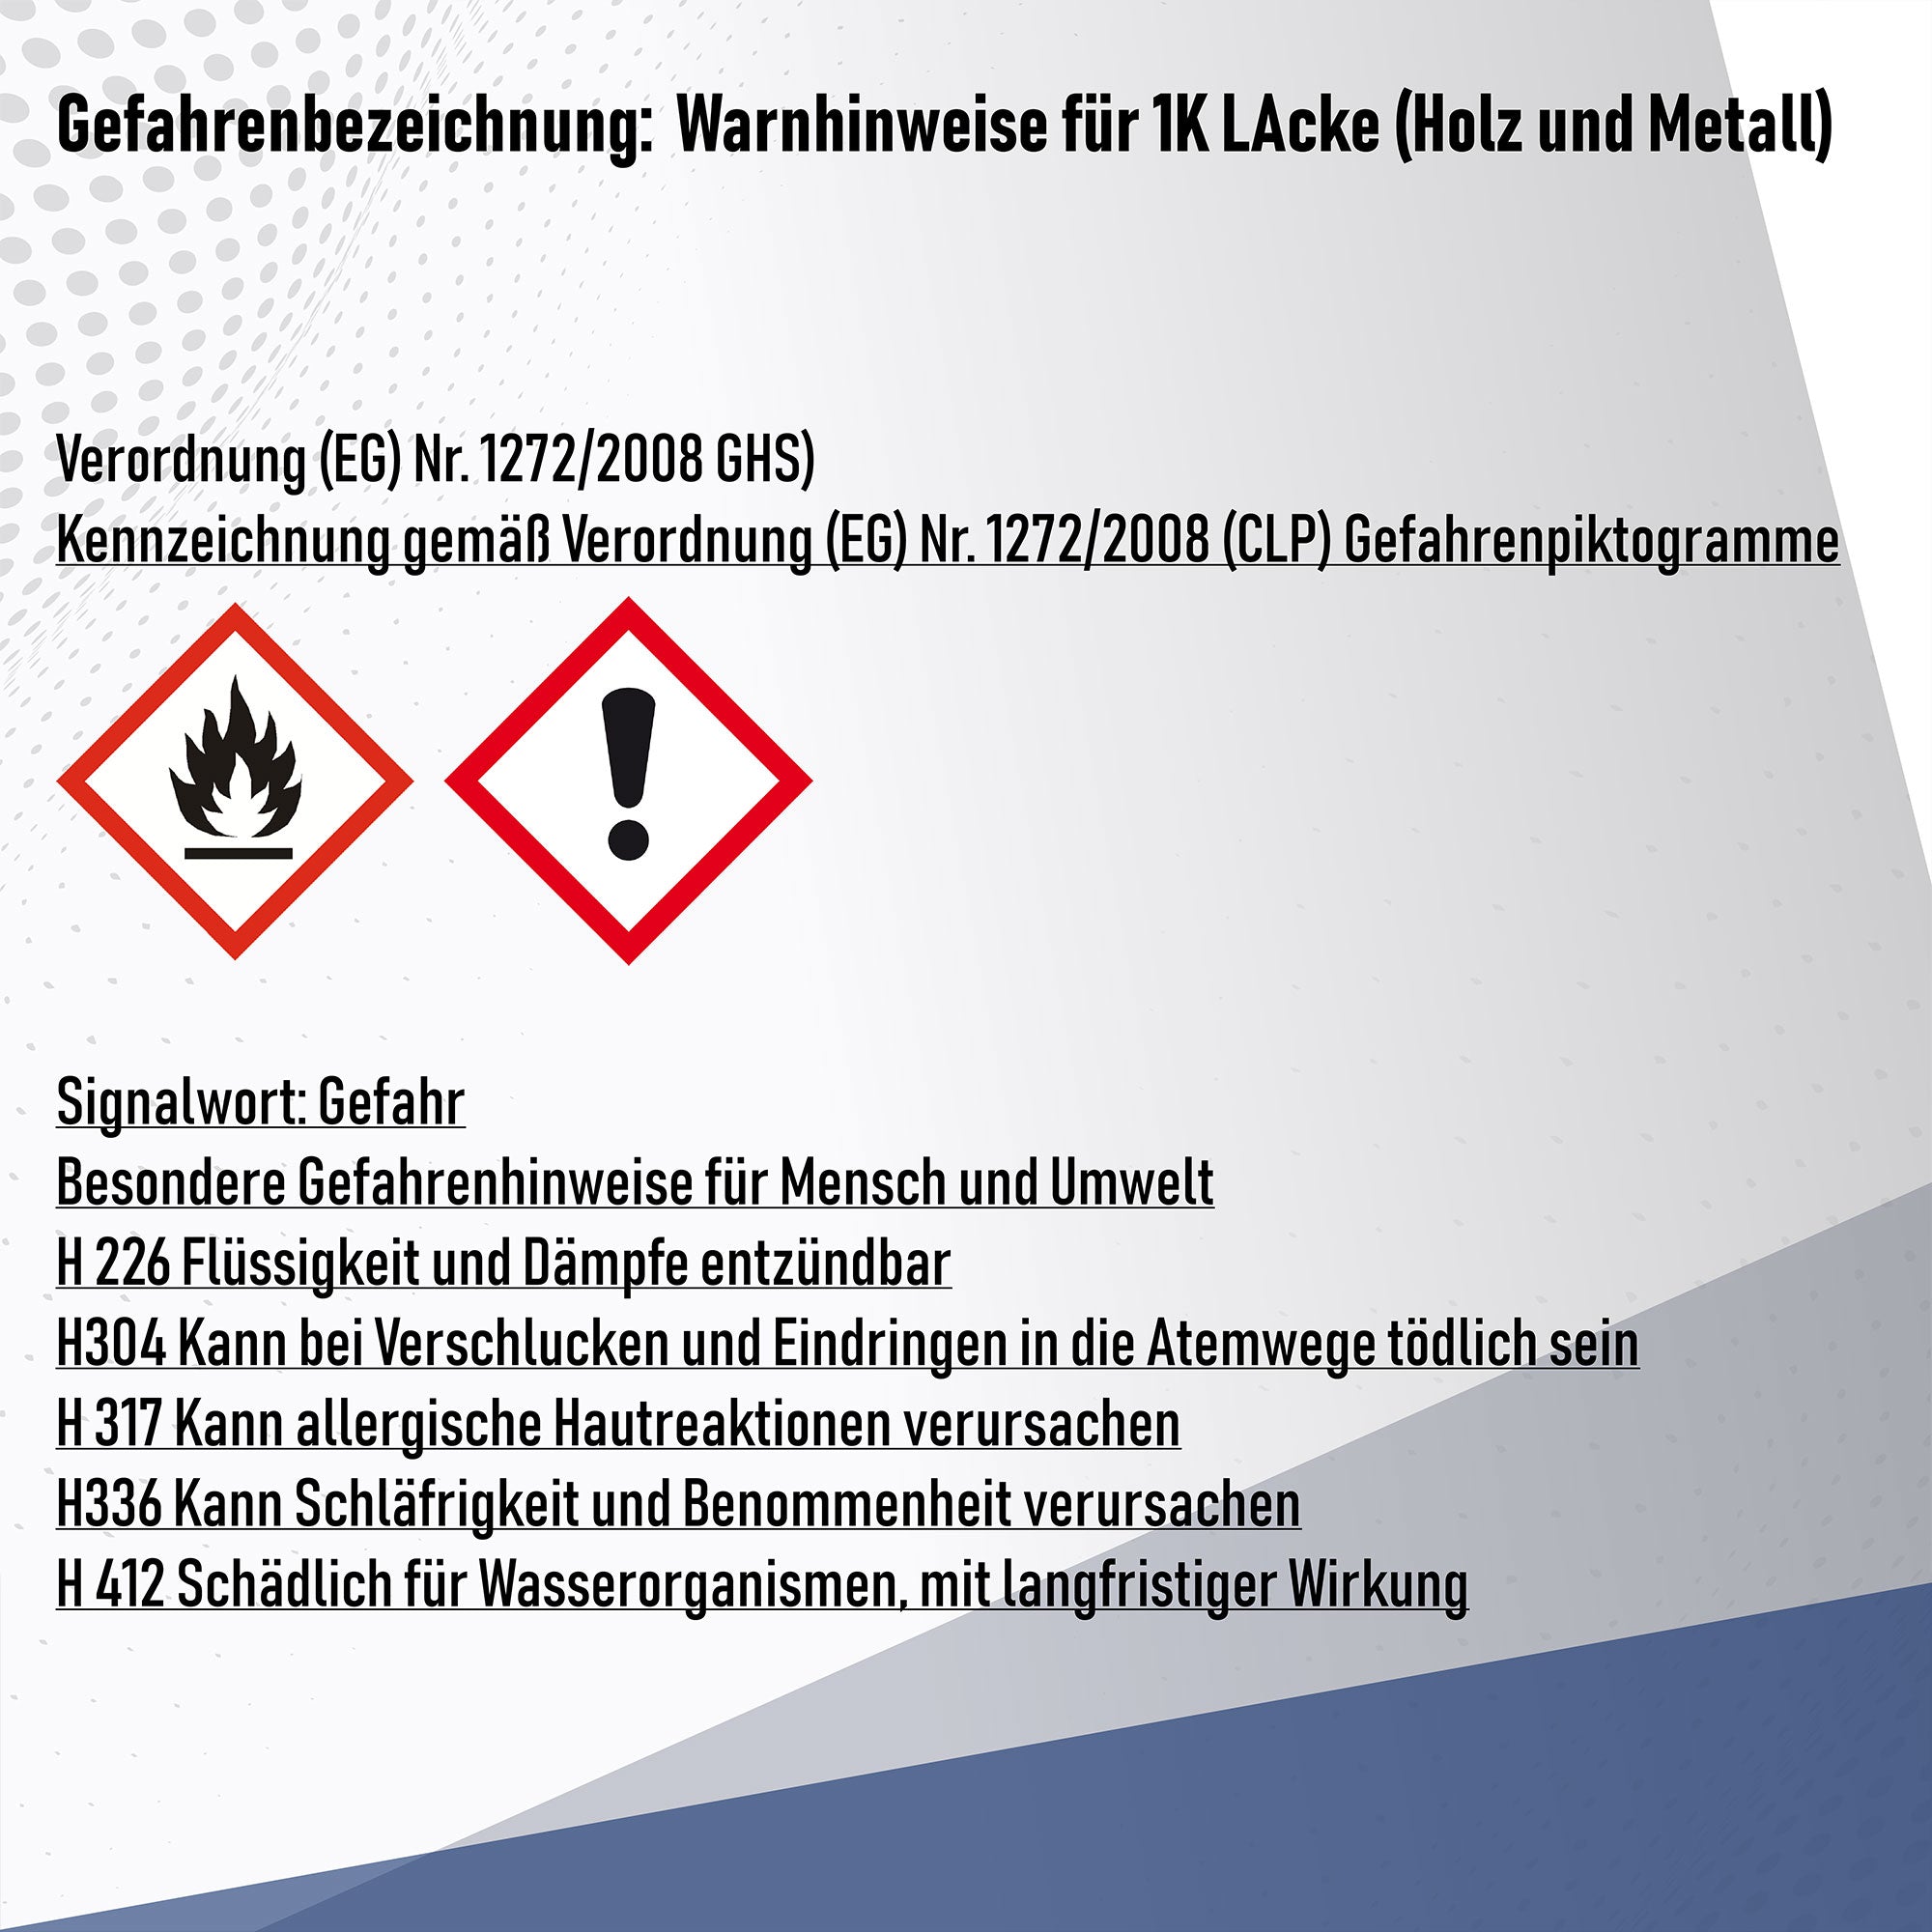 Hamburger Lack-Profi Buntlack in Olivgrün RAL 6003 mit Lackierset (X300) & Verdünnung (1 L) - 30% Sparangebot